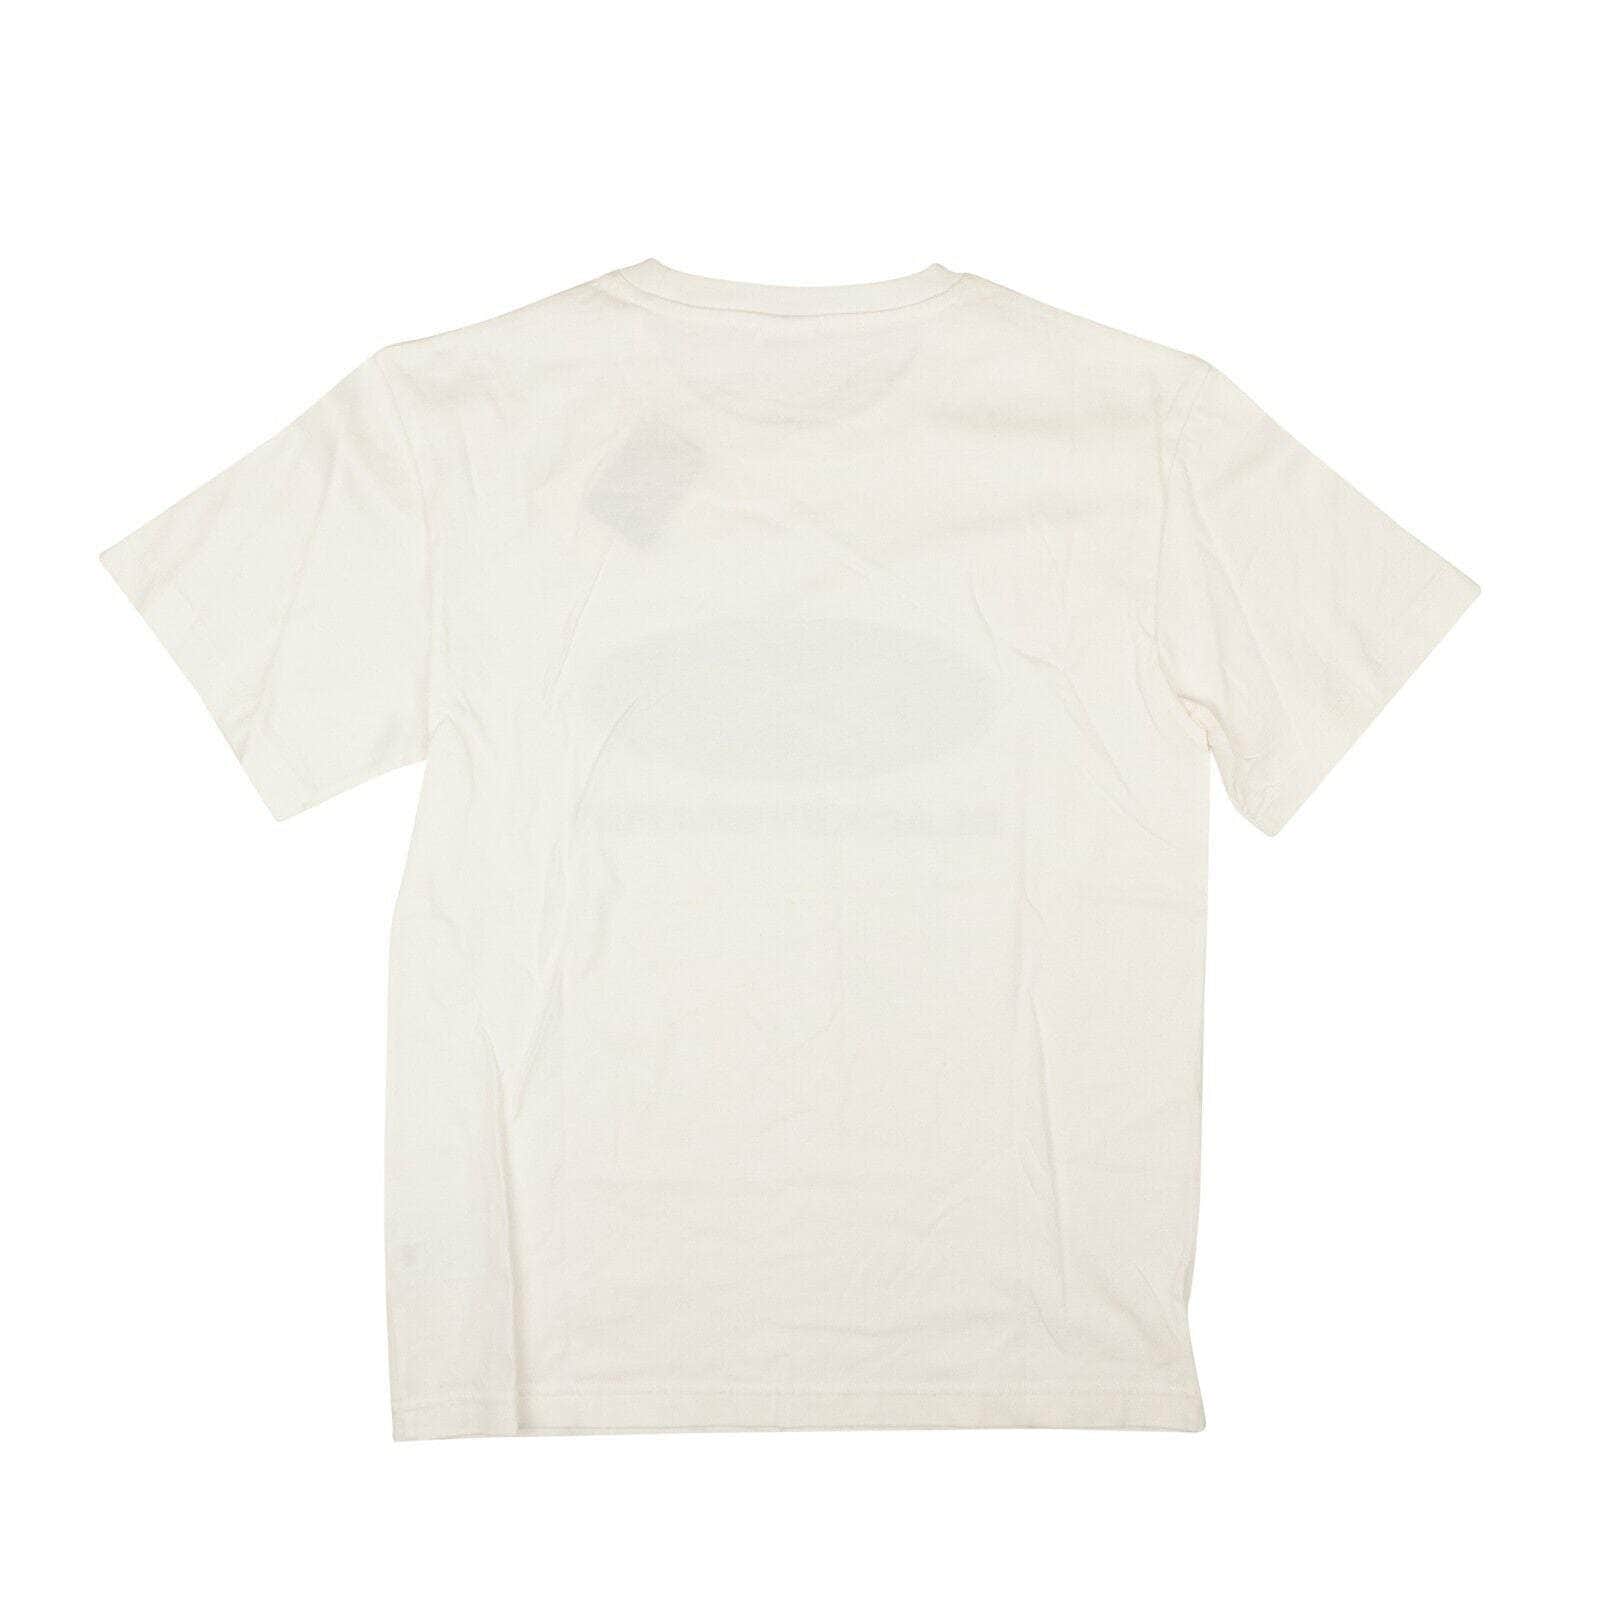 x White T-Shirt - GBNY